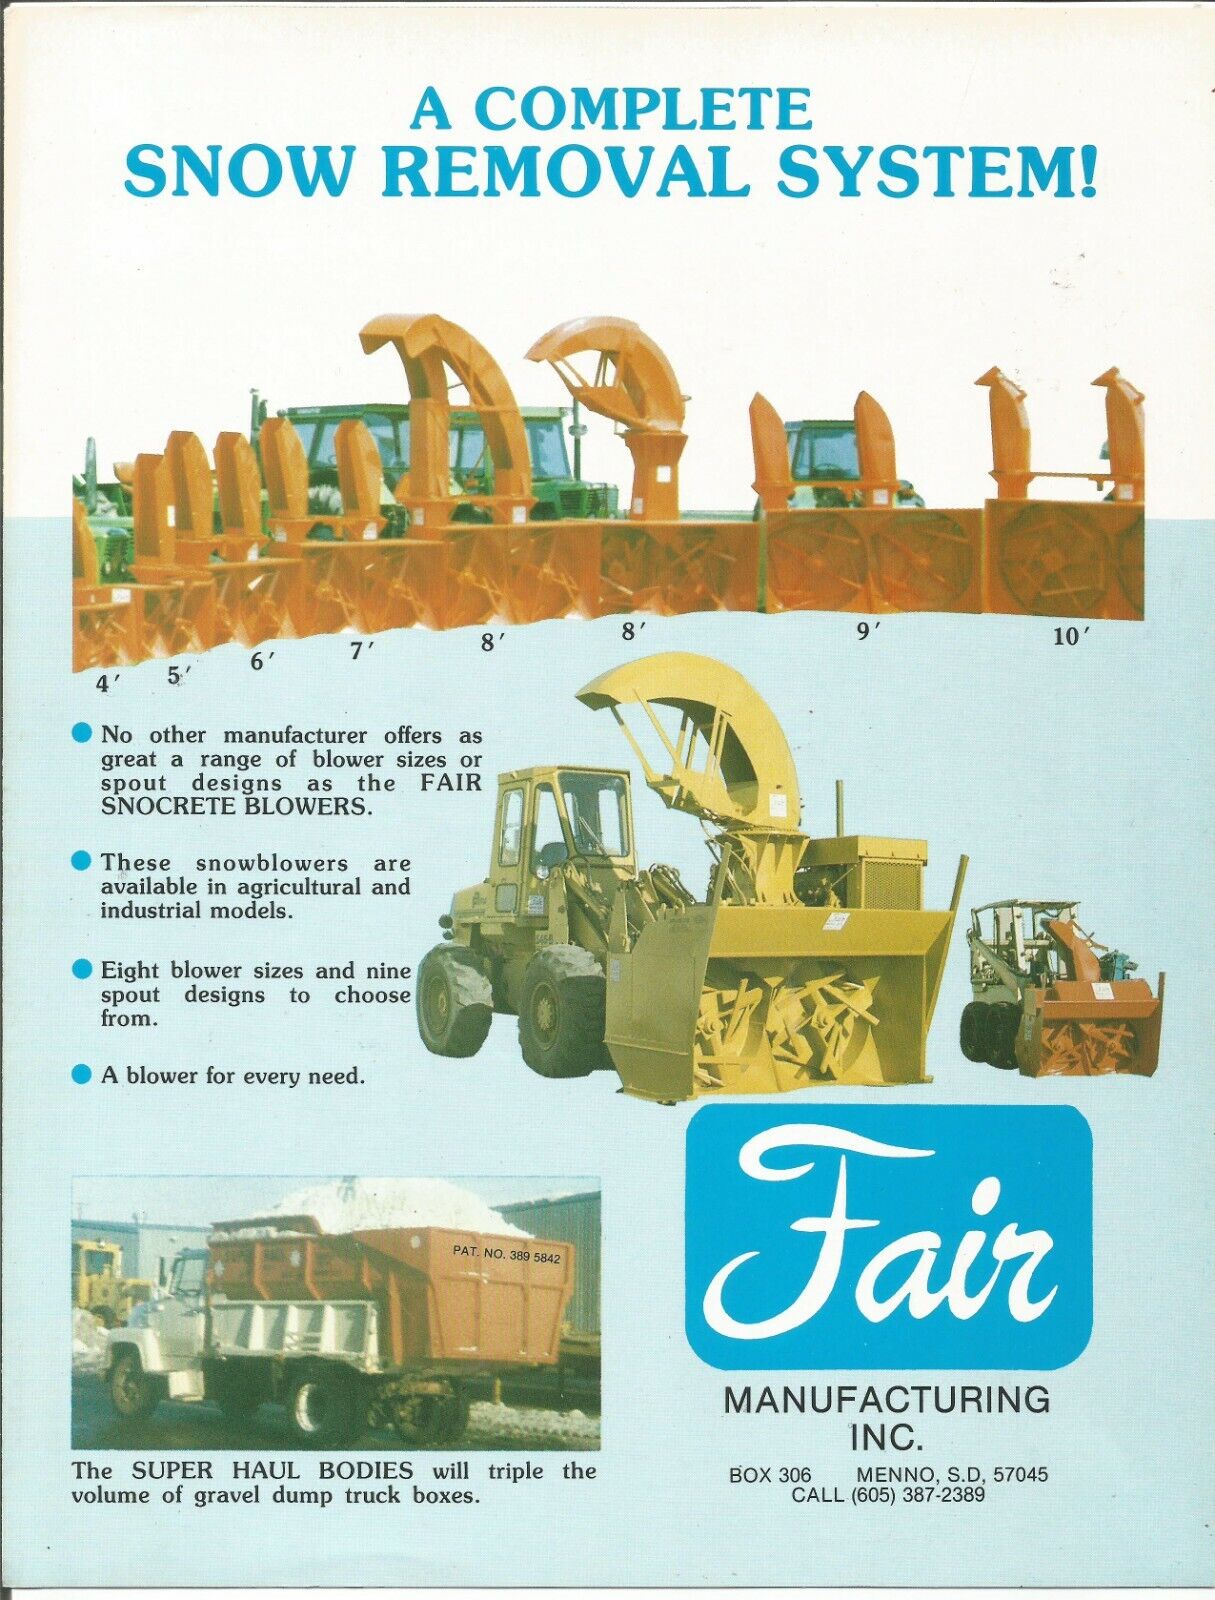 Original OE OEM Fair Snow Removal System Dealer Sales Brochure copyright 1983